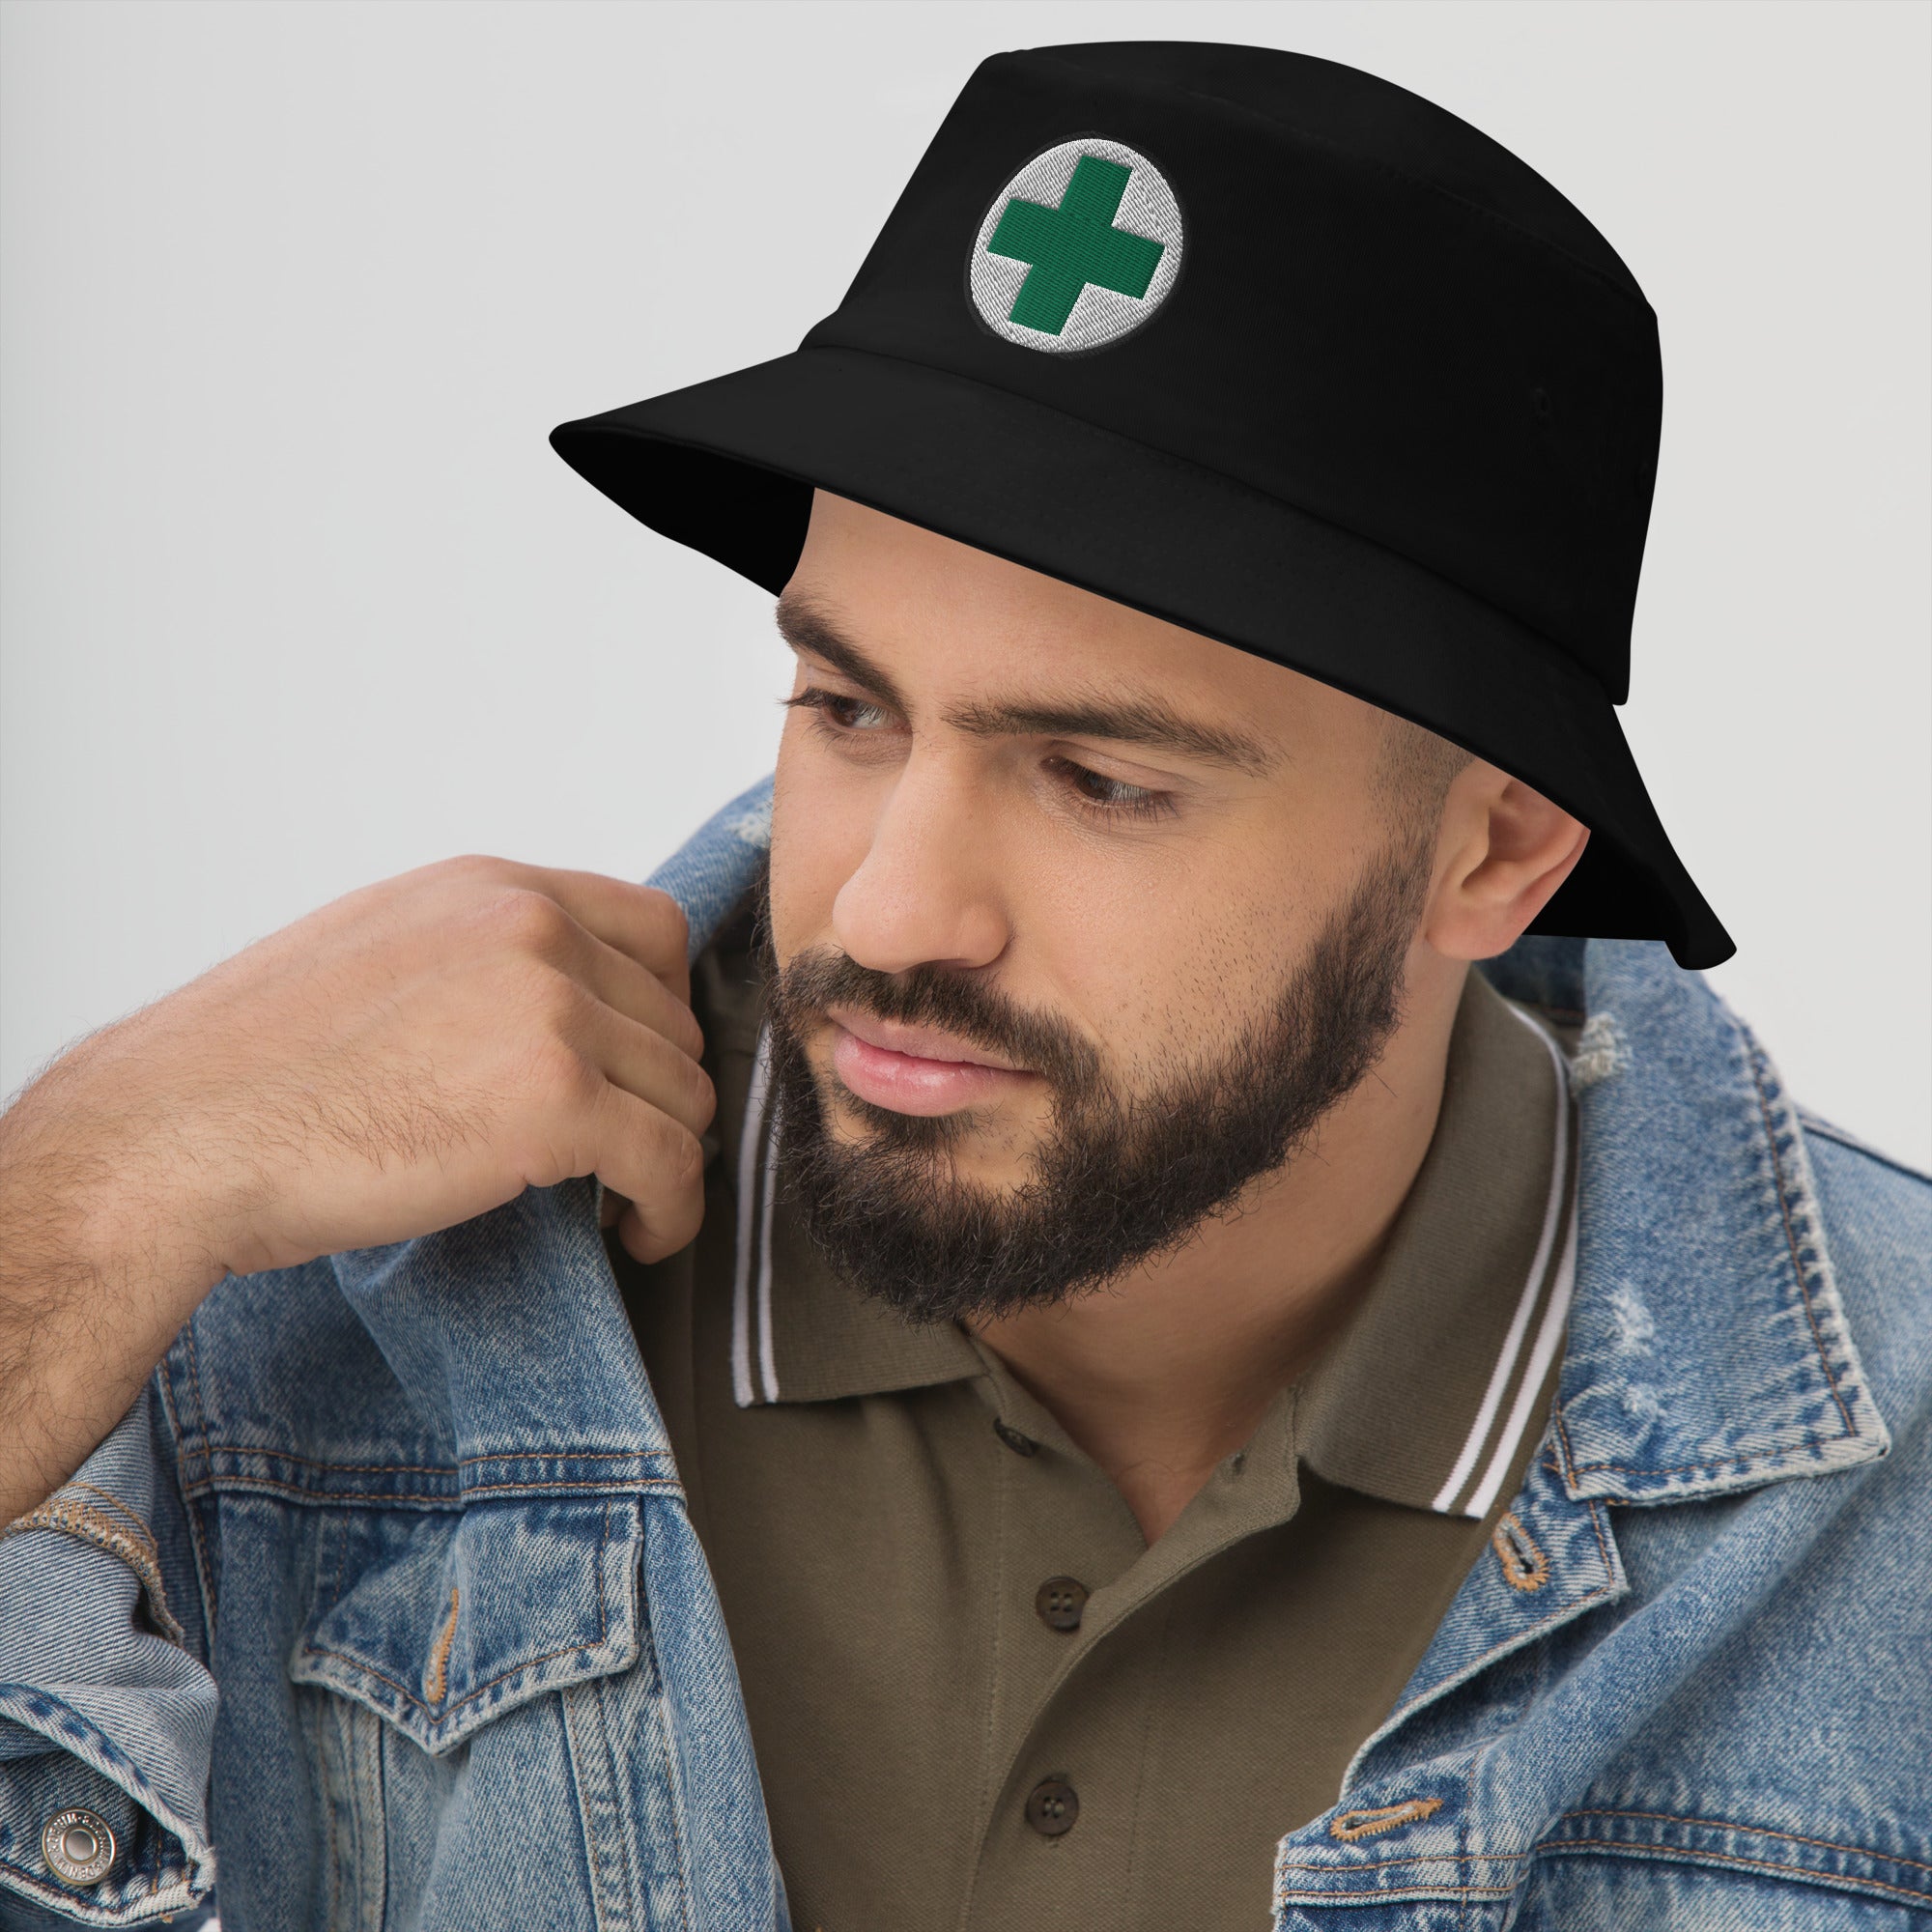 Medical Marijuana Symbol Embroidered Bucket Hat Cannabis Sativa Plant